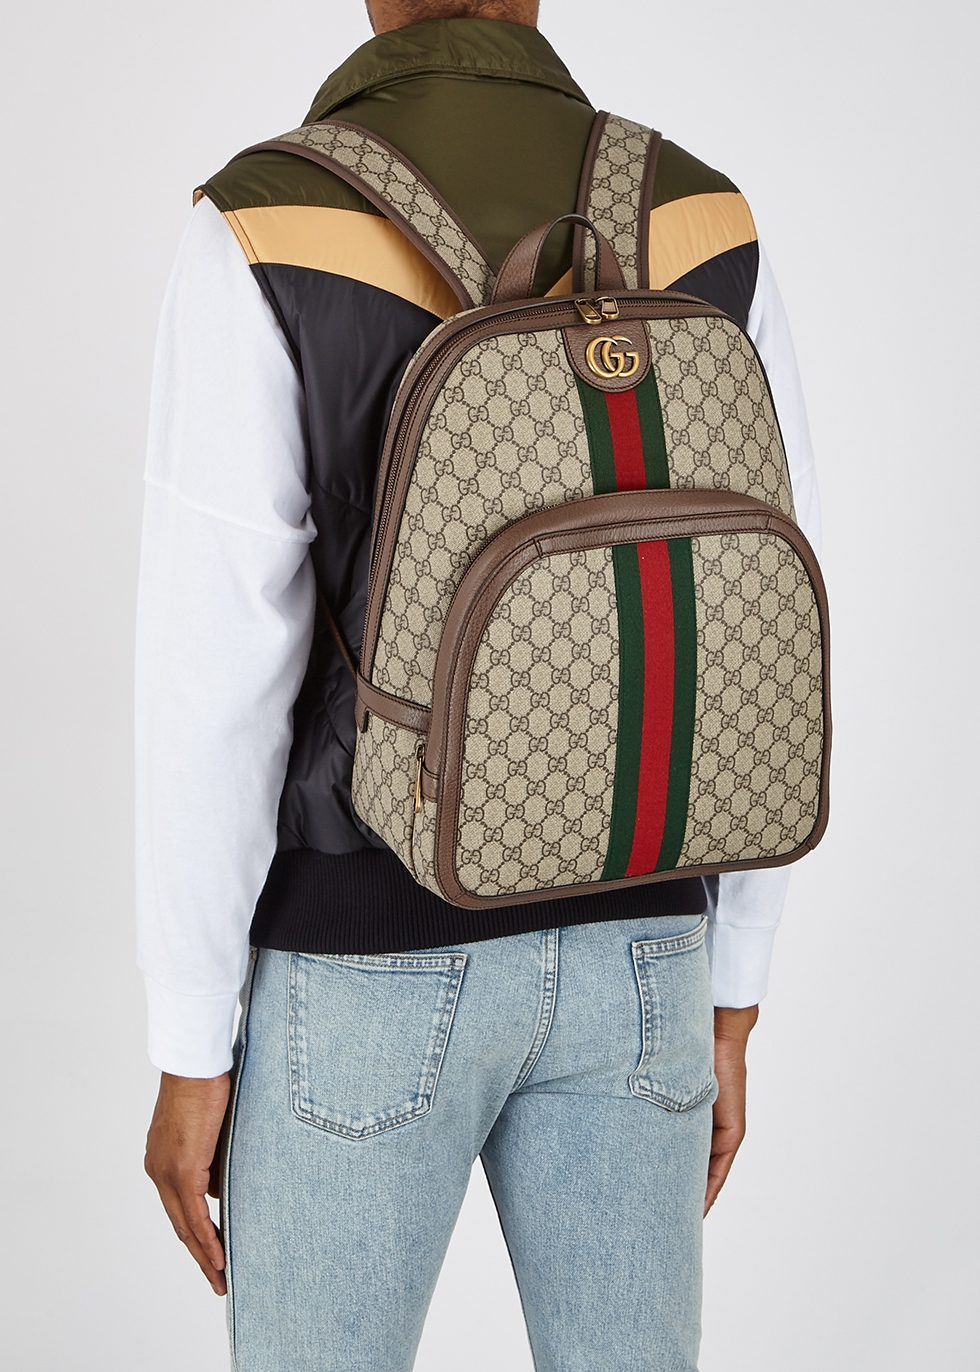 gucci backpack medium